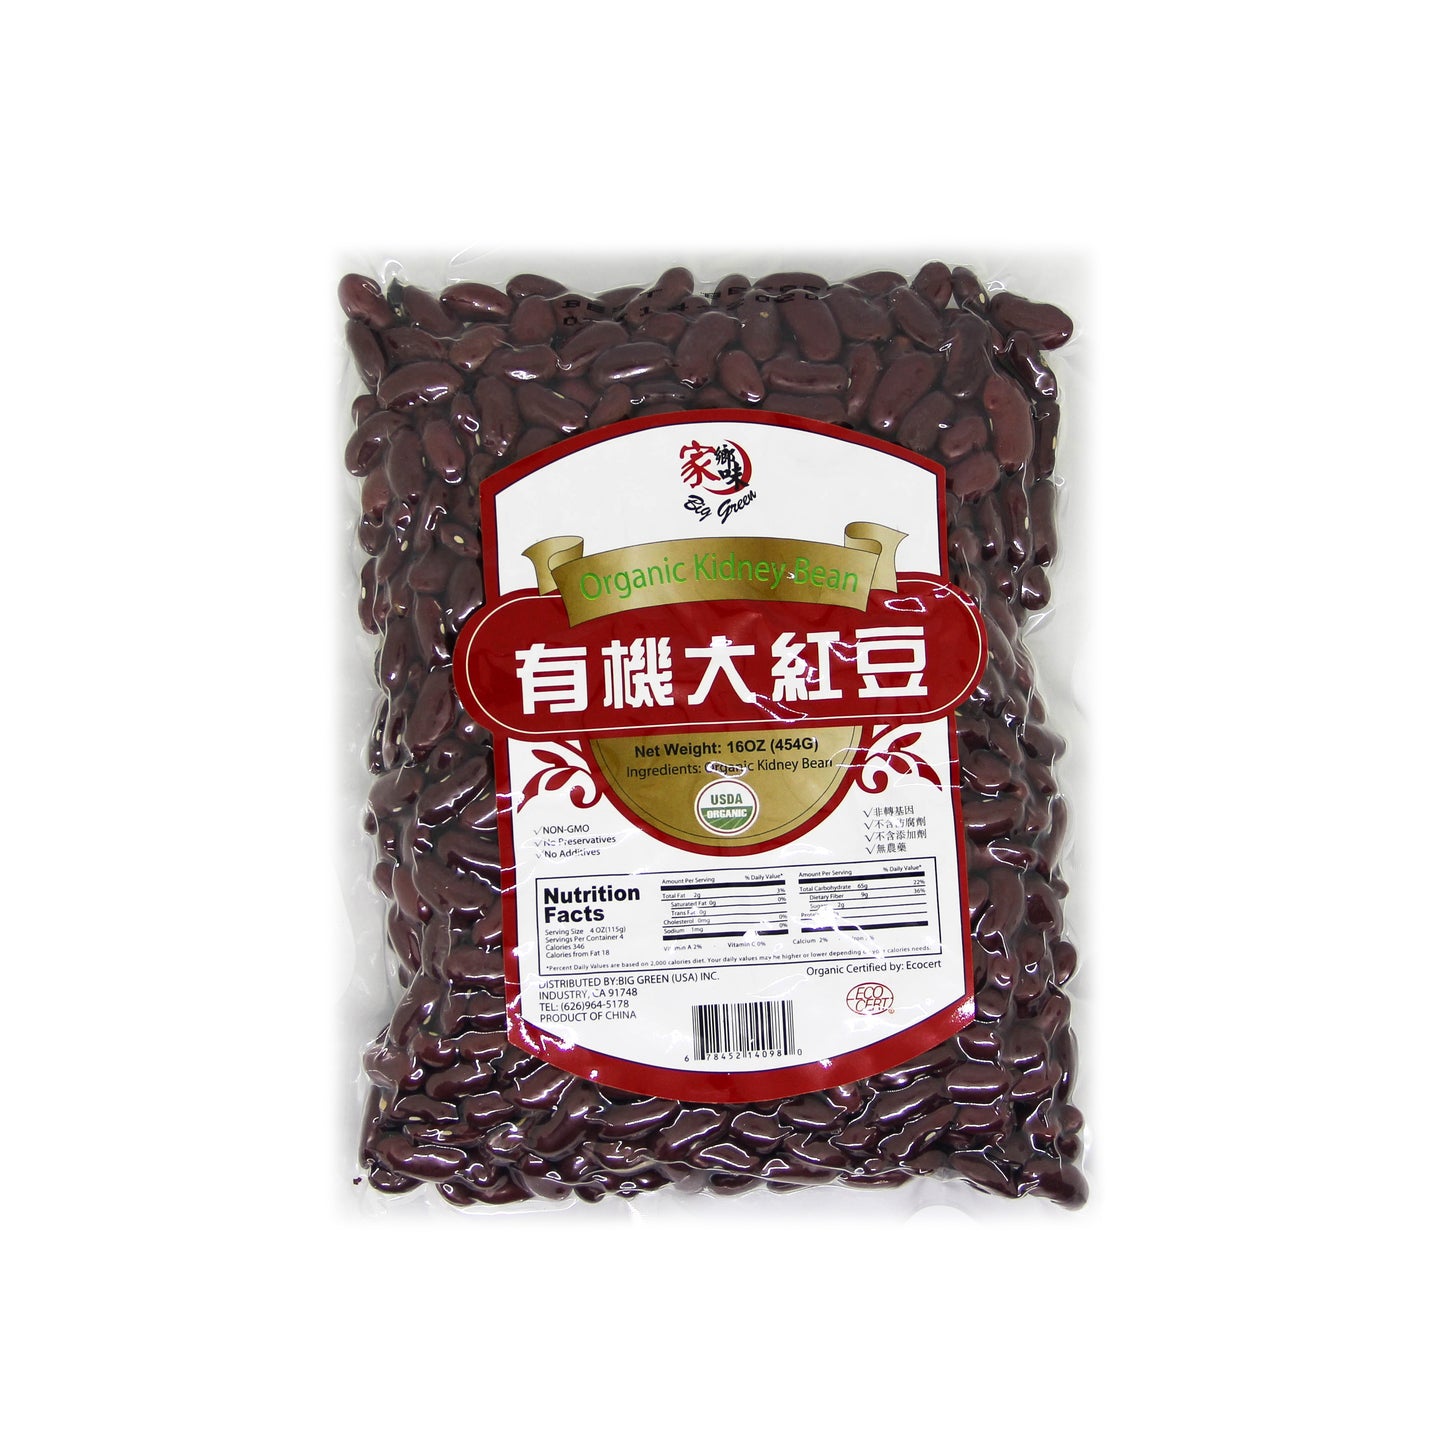 Organic Kidney Bean 家鄉味 有機大红豆